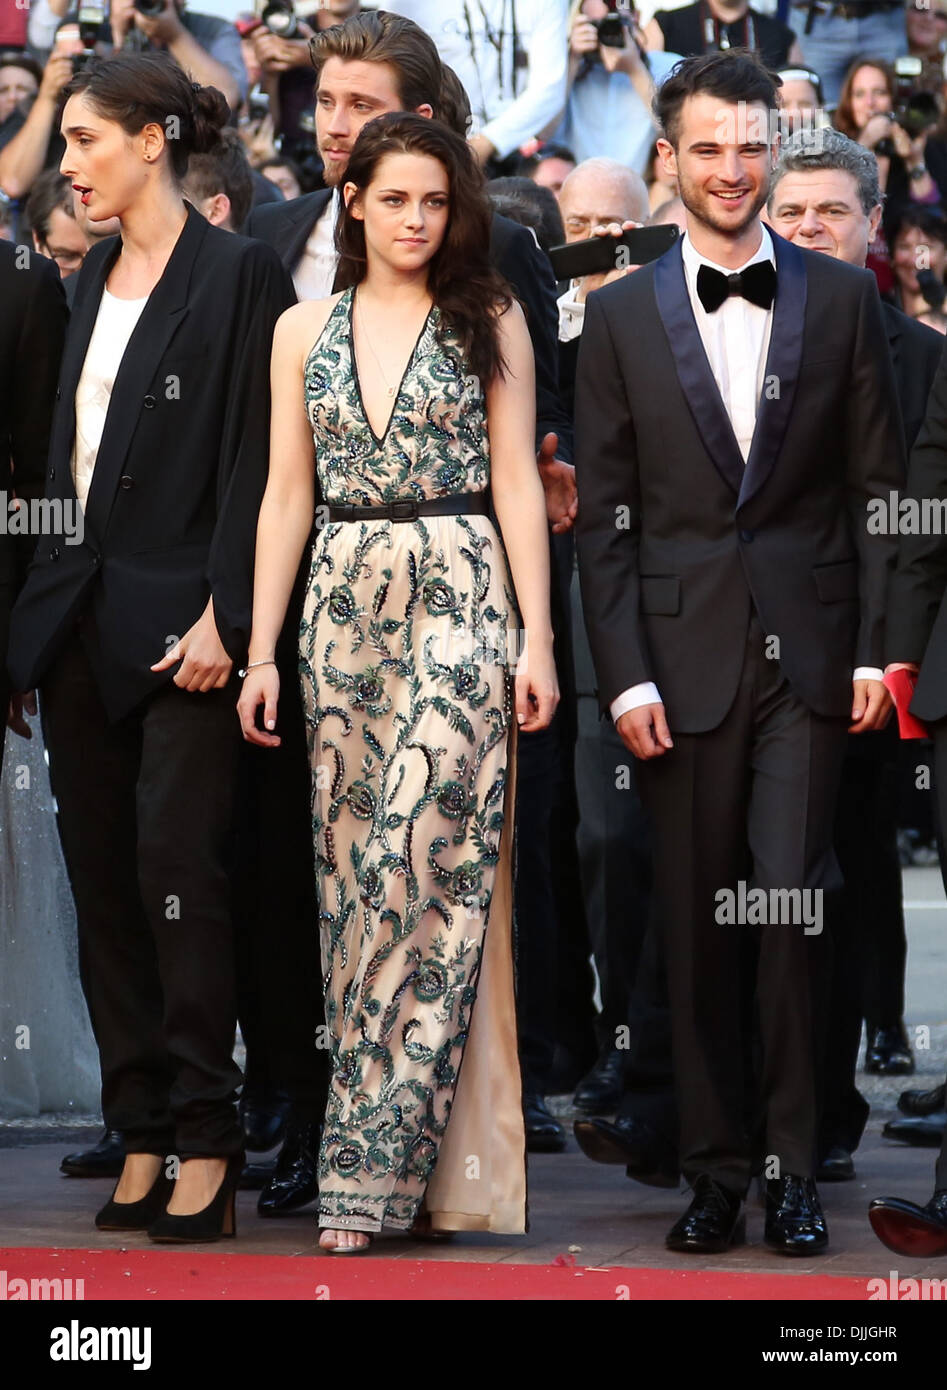 Tom Sturridge Kristen Stewart 'On Road' premiere during 65th Cannes Film Festival Cannes France - 23.05.12 Stock Photo